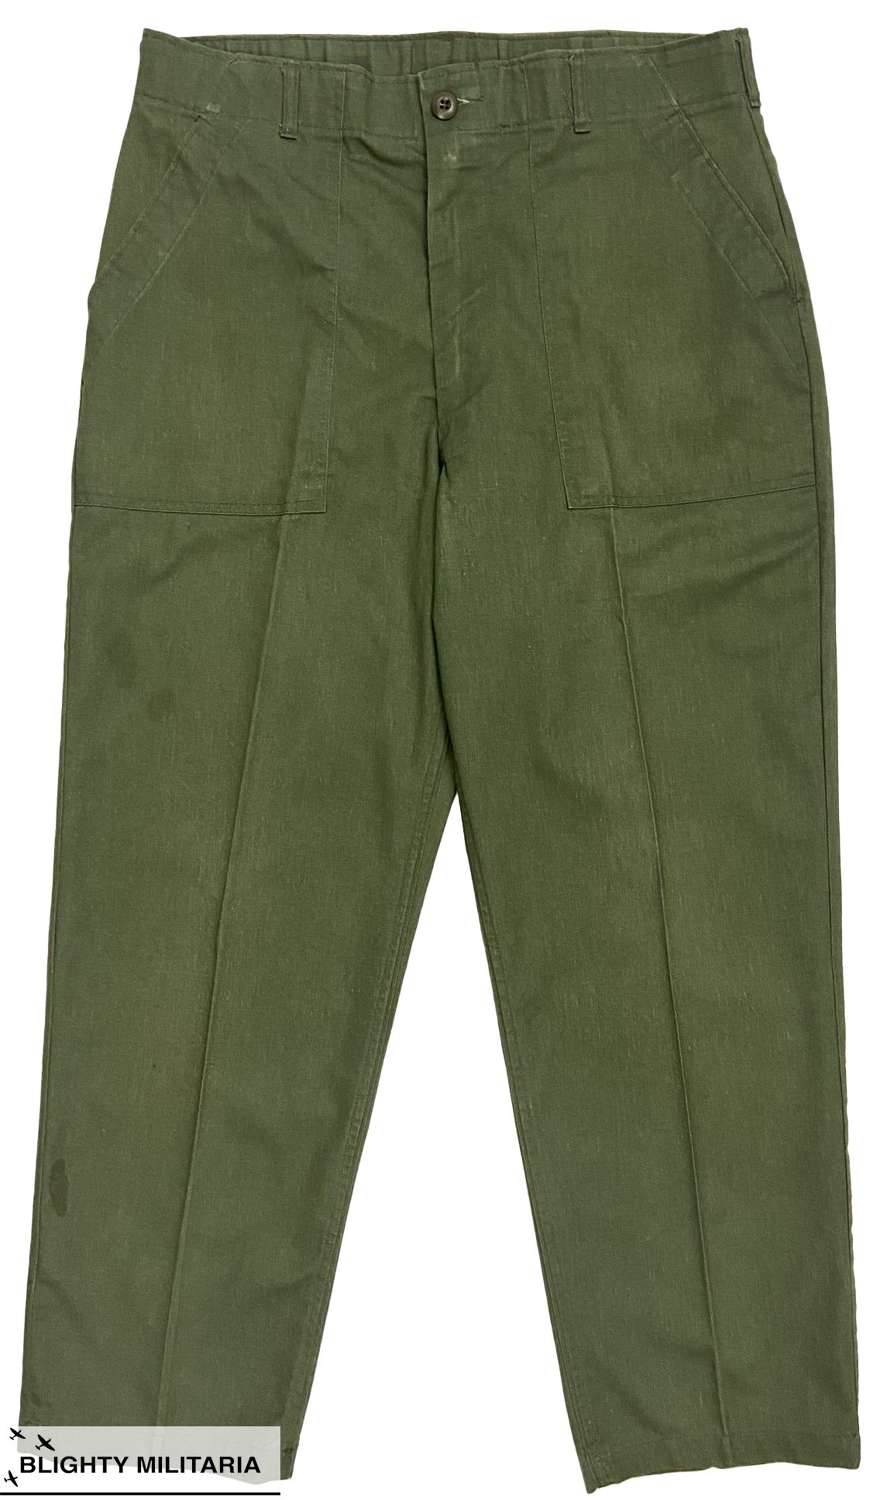 Original 1985 Dated US Army OG-507 Fatigue Pants - 34x28